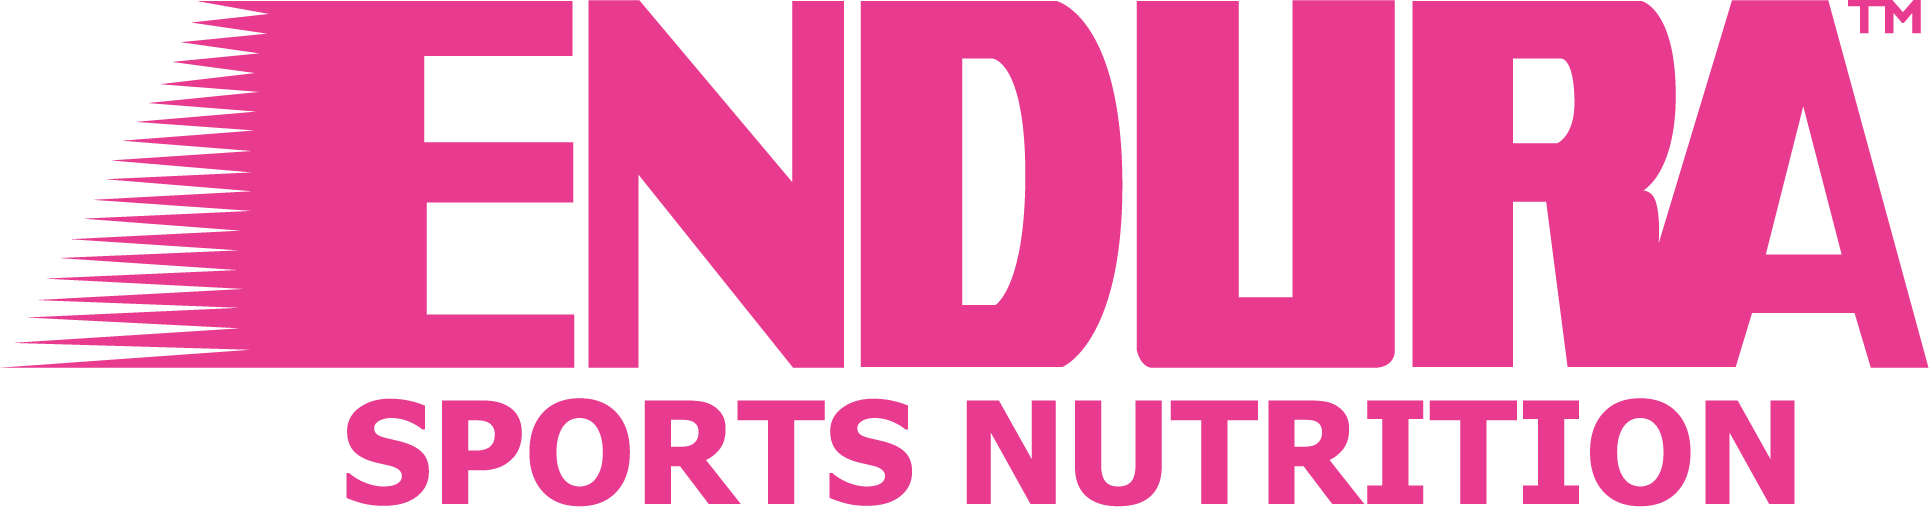 Endura Sports Nutrition Logo